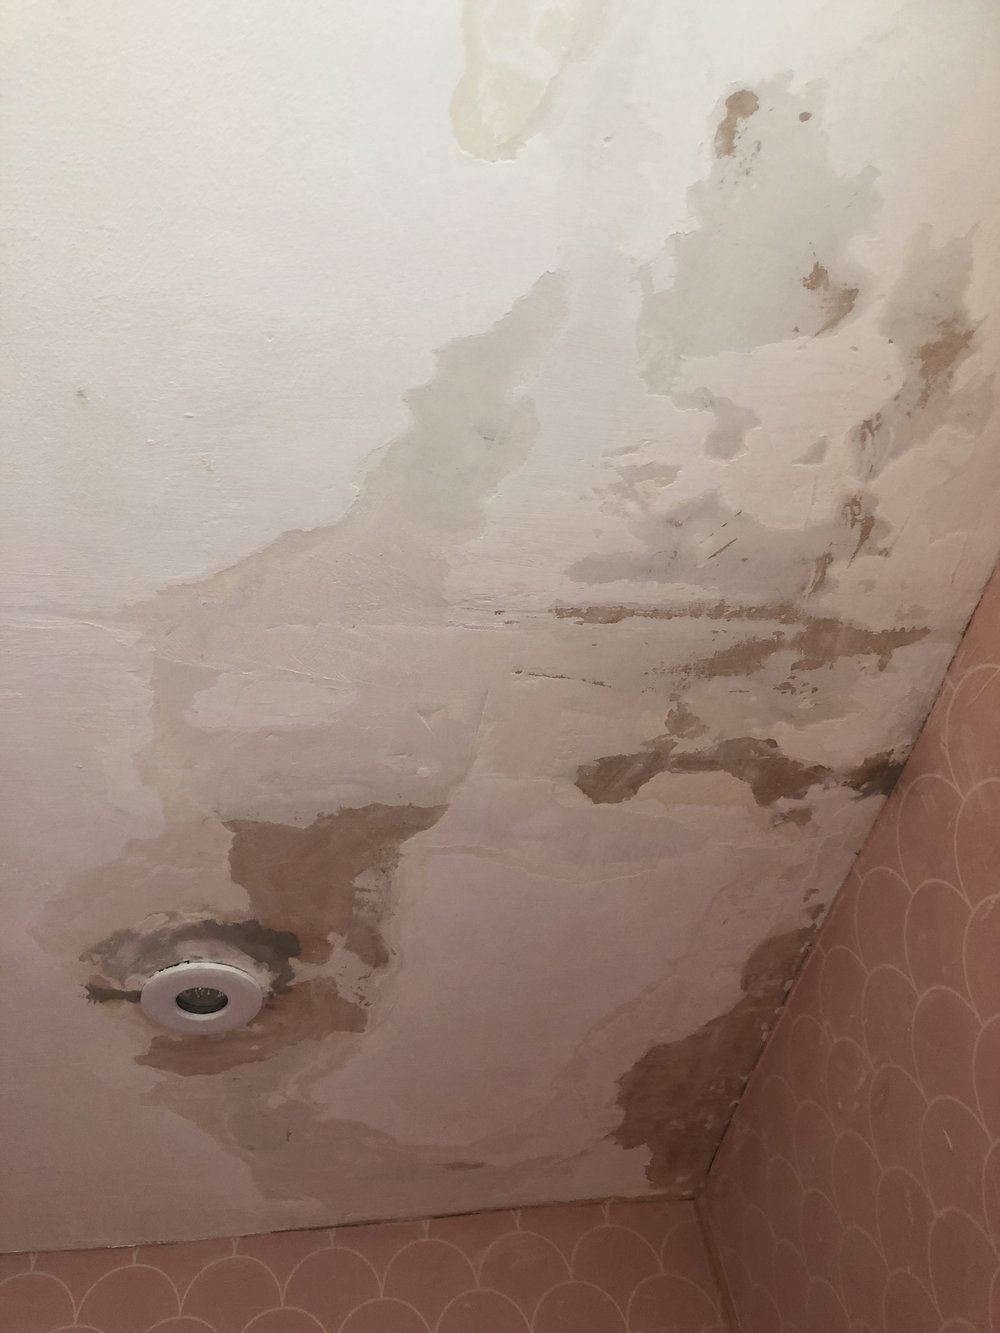 How To Repair A Peeling Bathroom Wall Or Ceiling Melanie Lissack Interiors